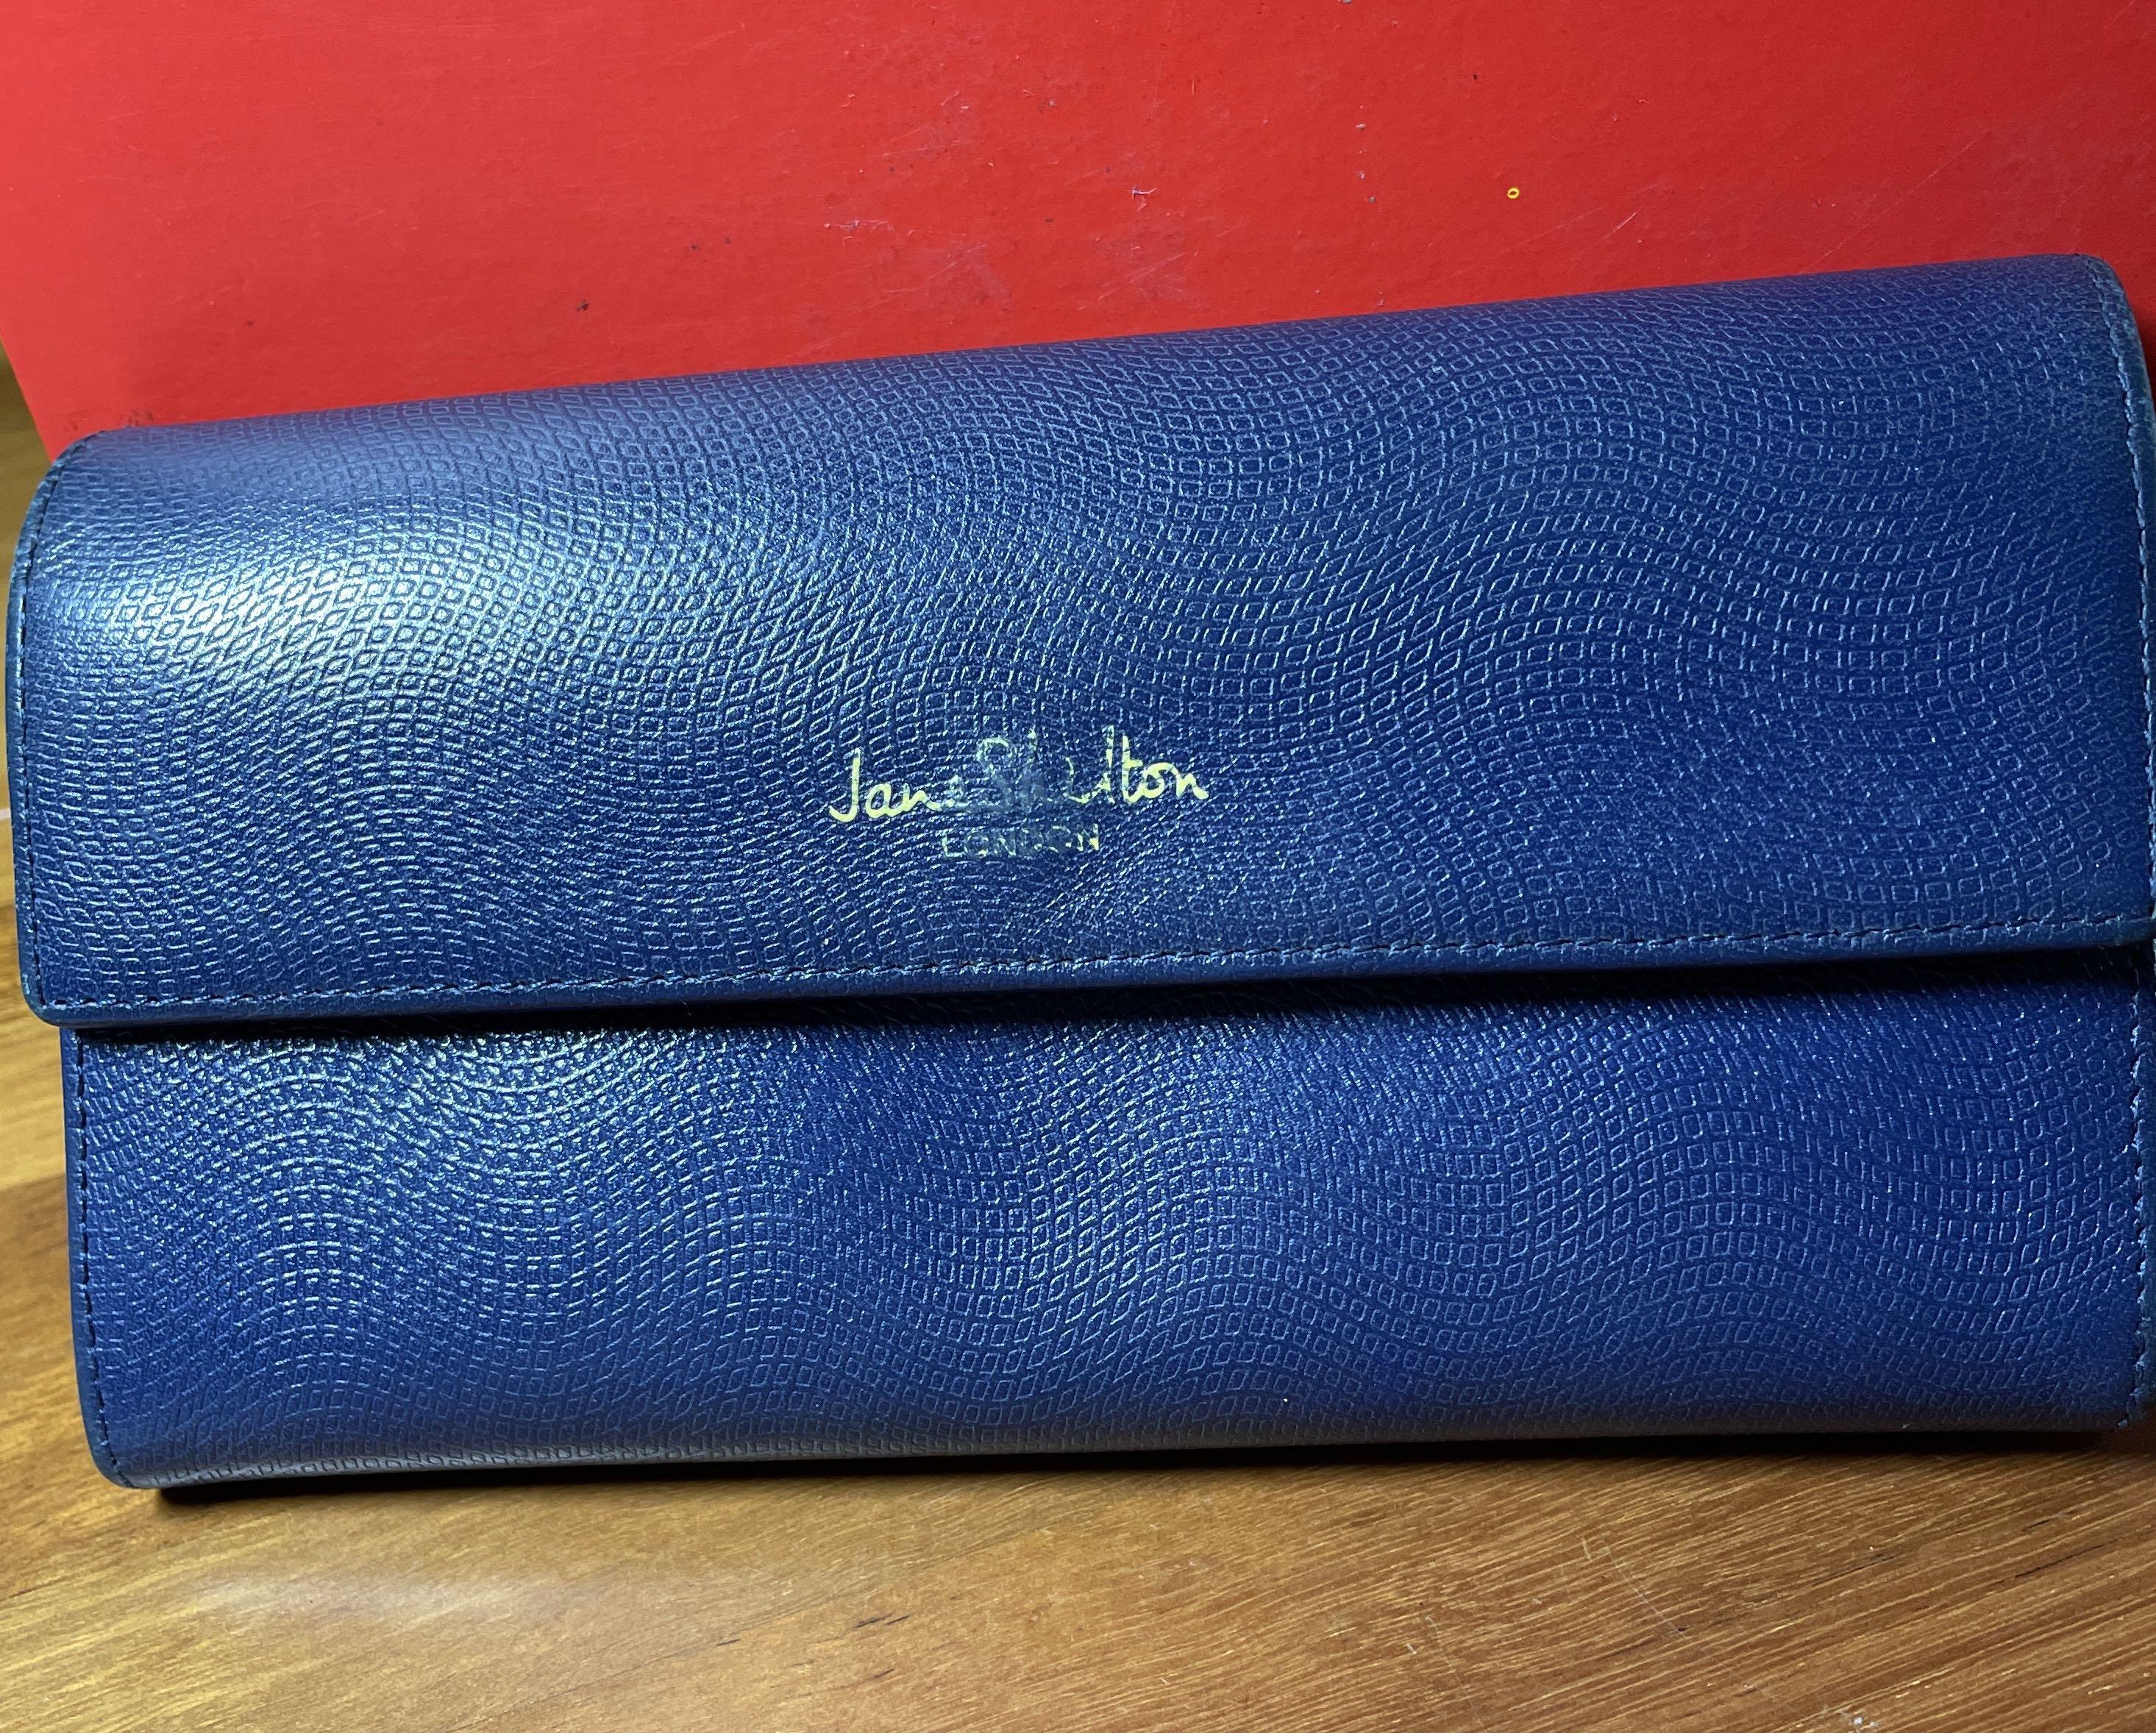 Vintage Jane Shilton Leather Handbag / Clutch Bag - Etsy